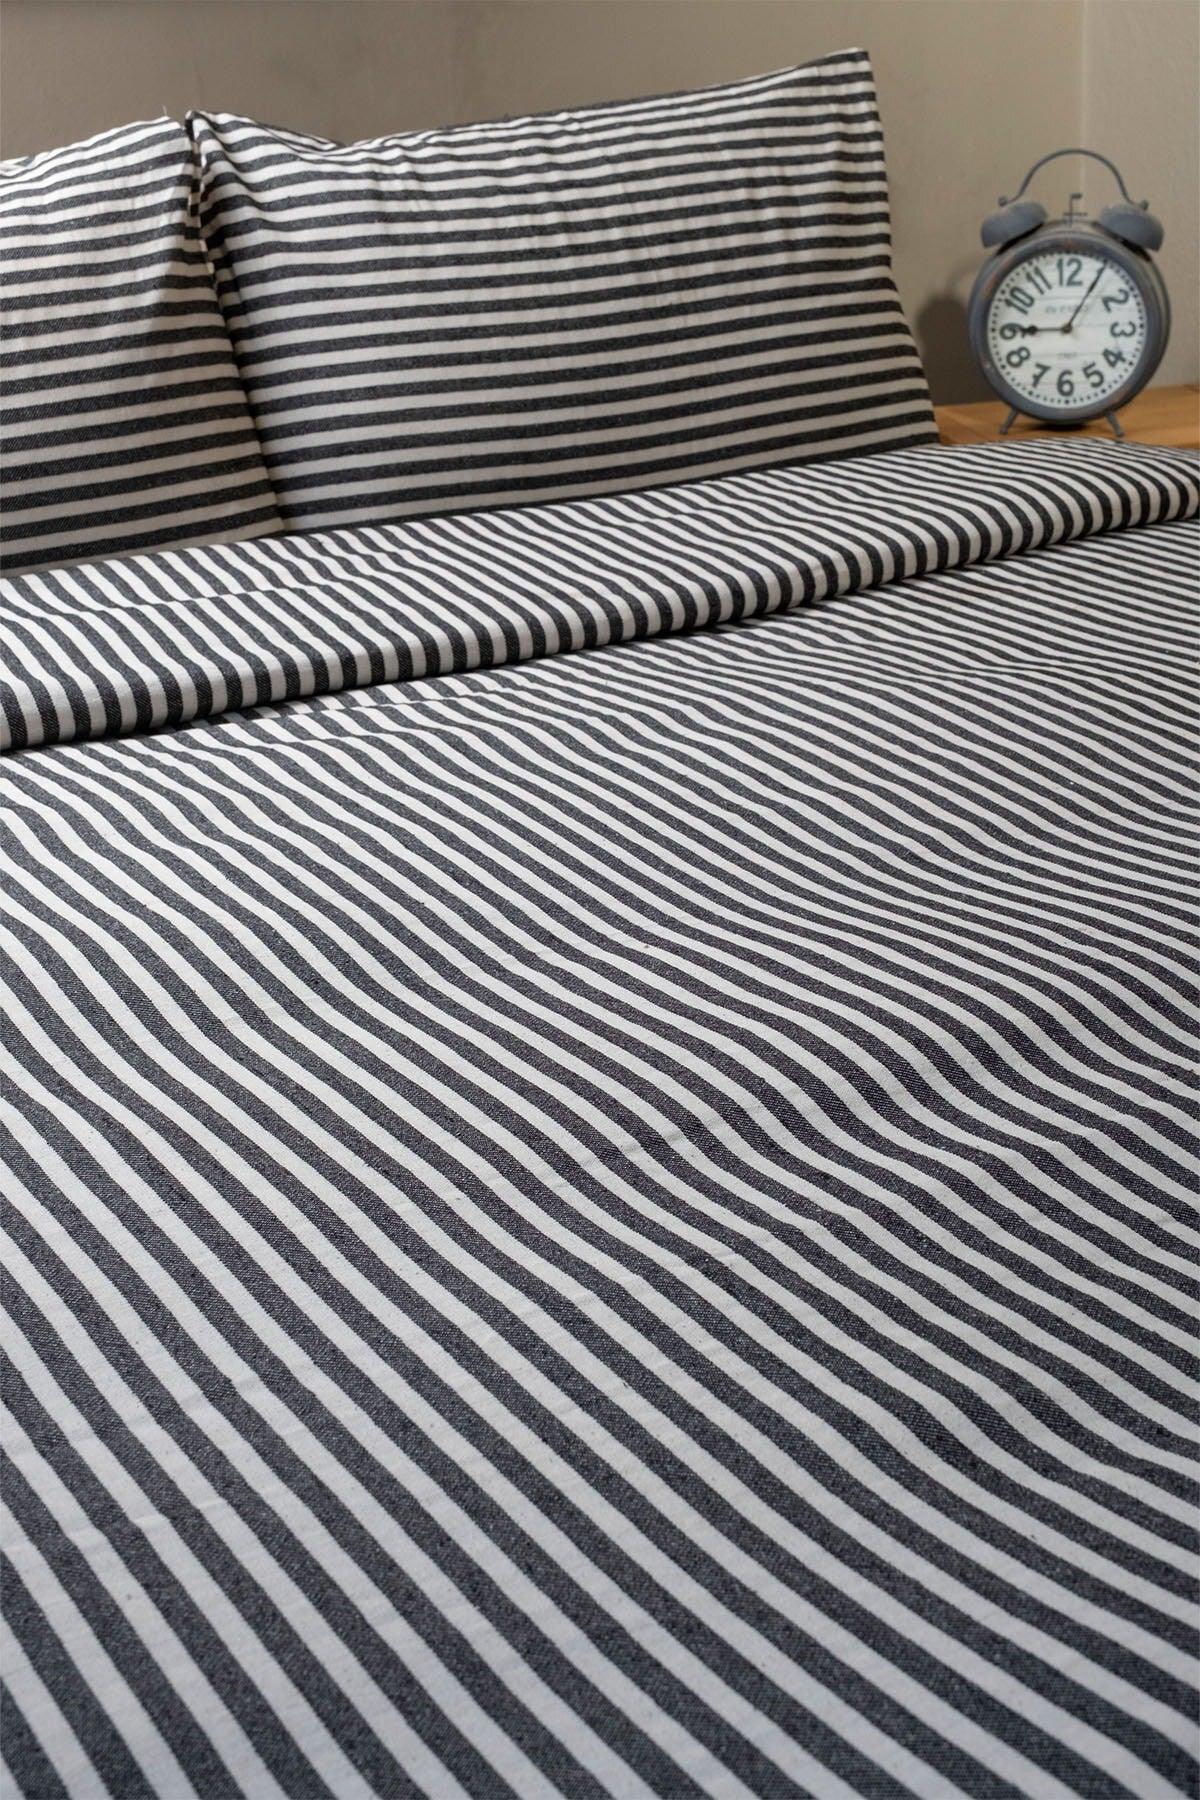 Black Striped Linen Double Duvet Cover